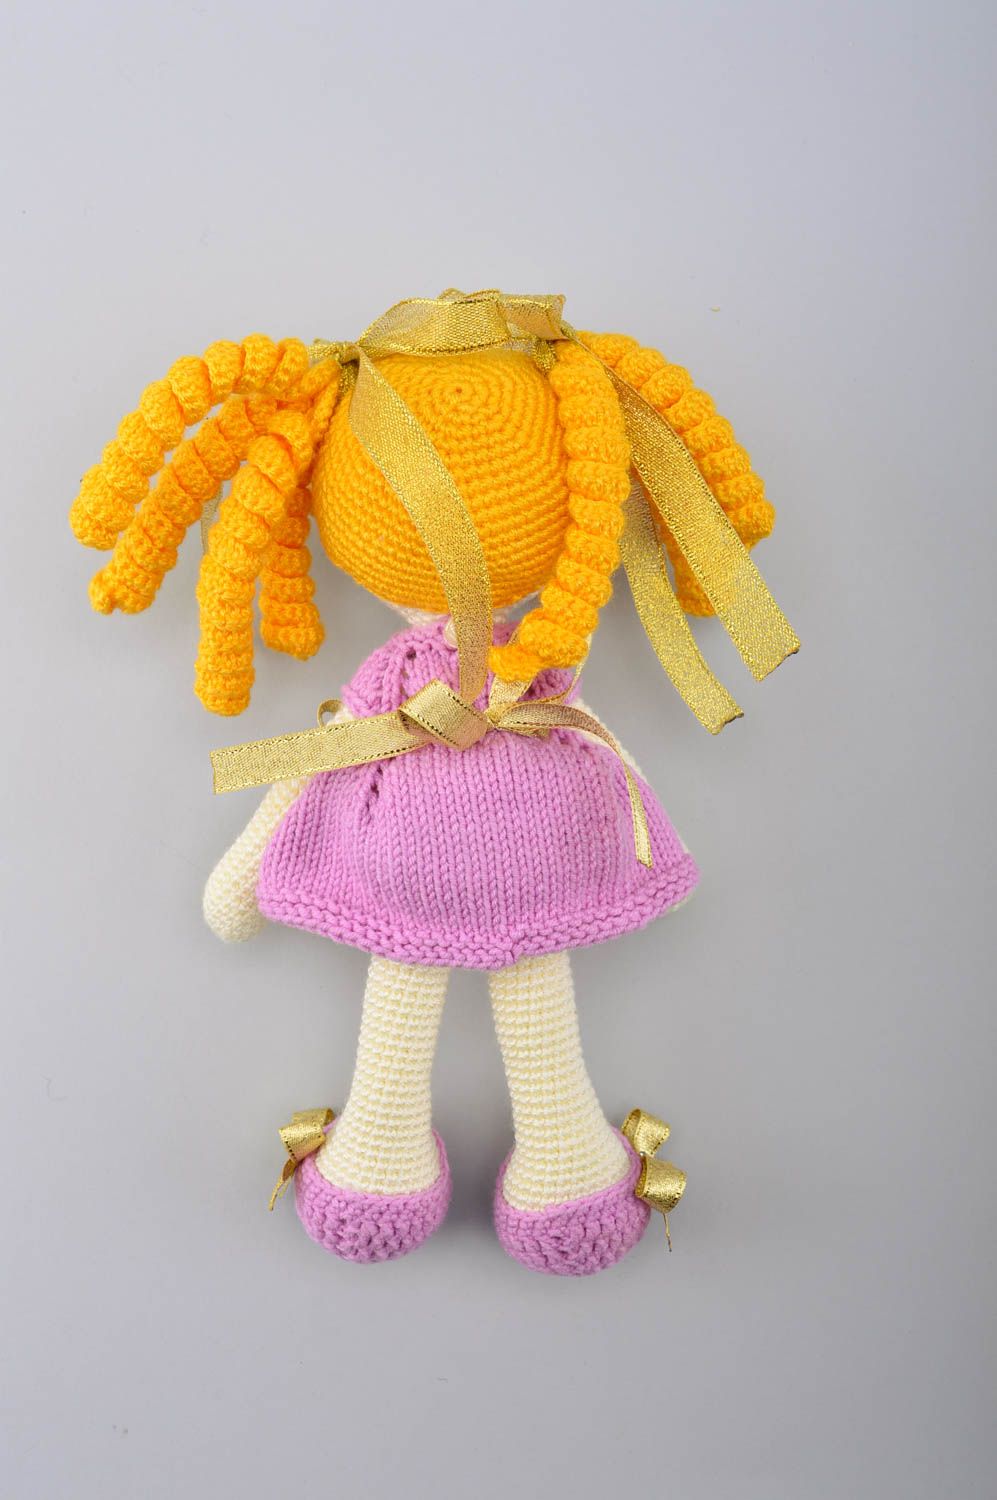 Handmade crochet doll designer doll unusual gift for baby nursery decor photo 3